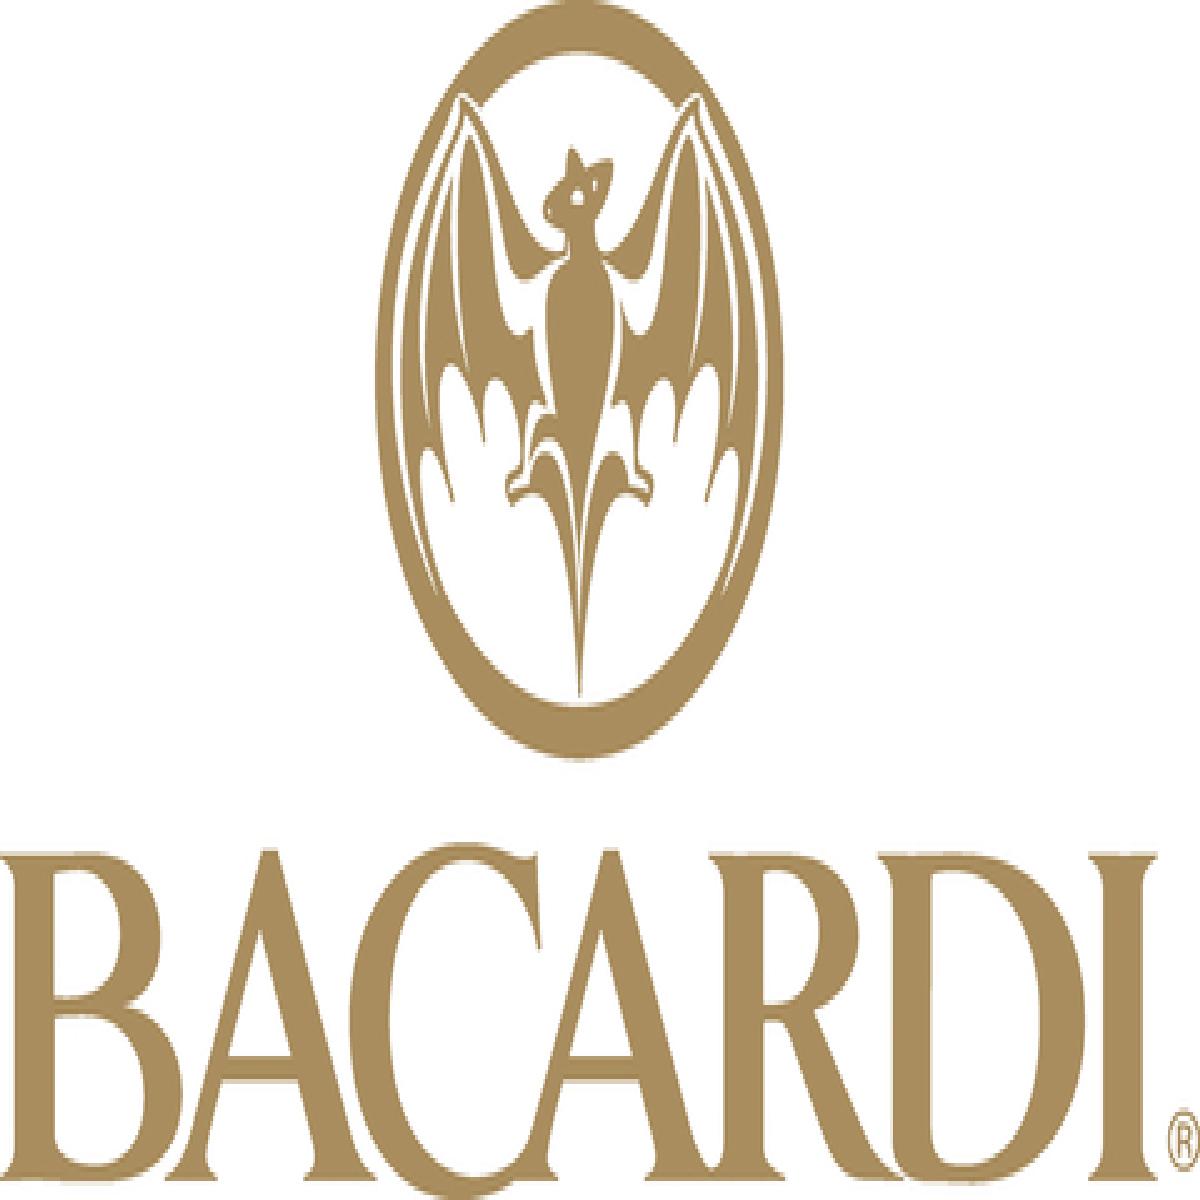 Bacardi Announces Global Marketing Moves